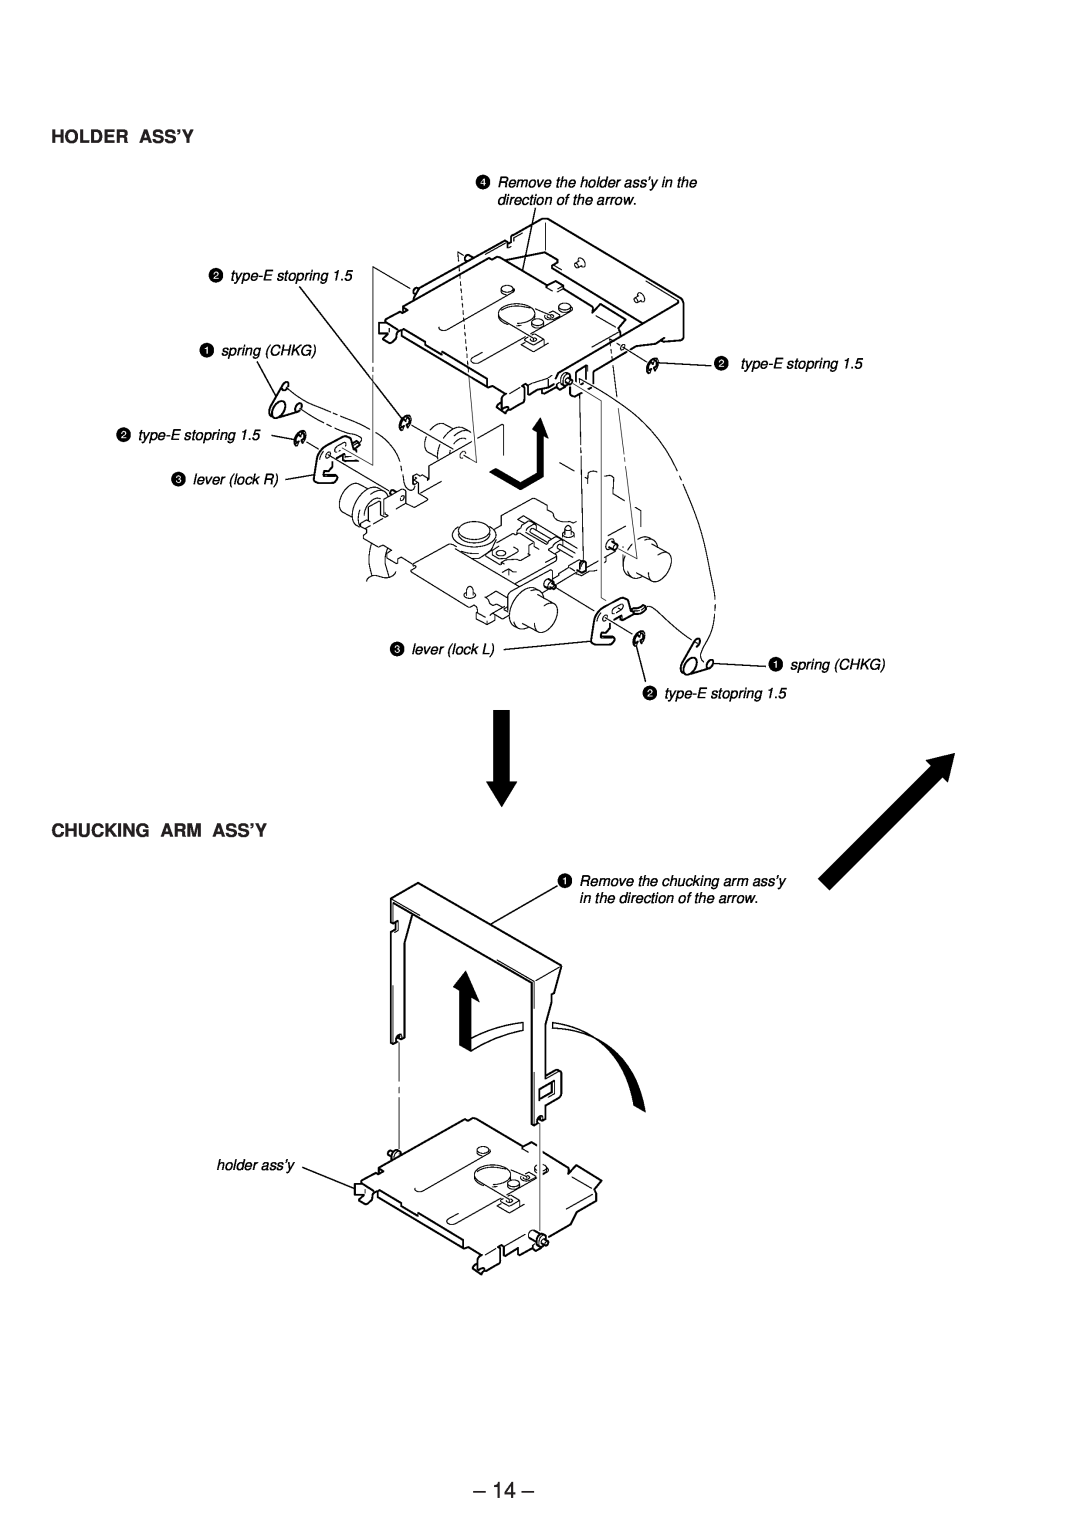 Sony MDX-C5970R service manual 14, Holder Ass’Y, Chucking Arm Ass’Y 